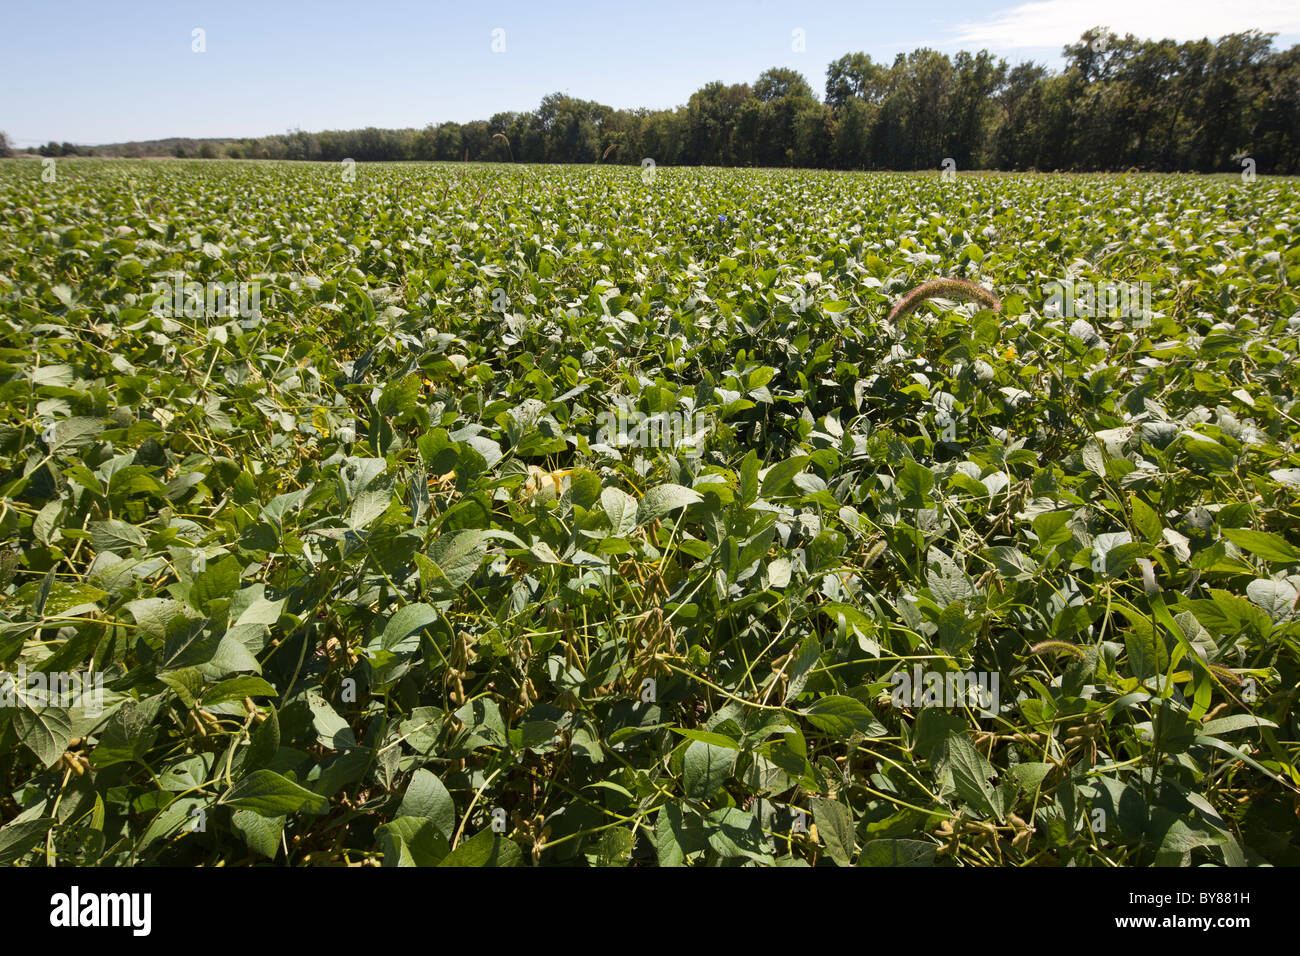 soybean or soya bean cultivation, USA Stock Photo